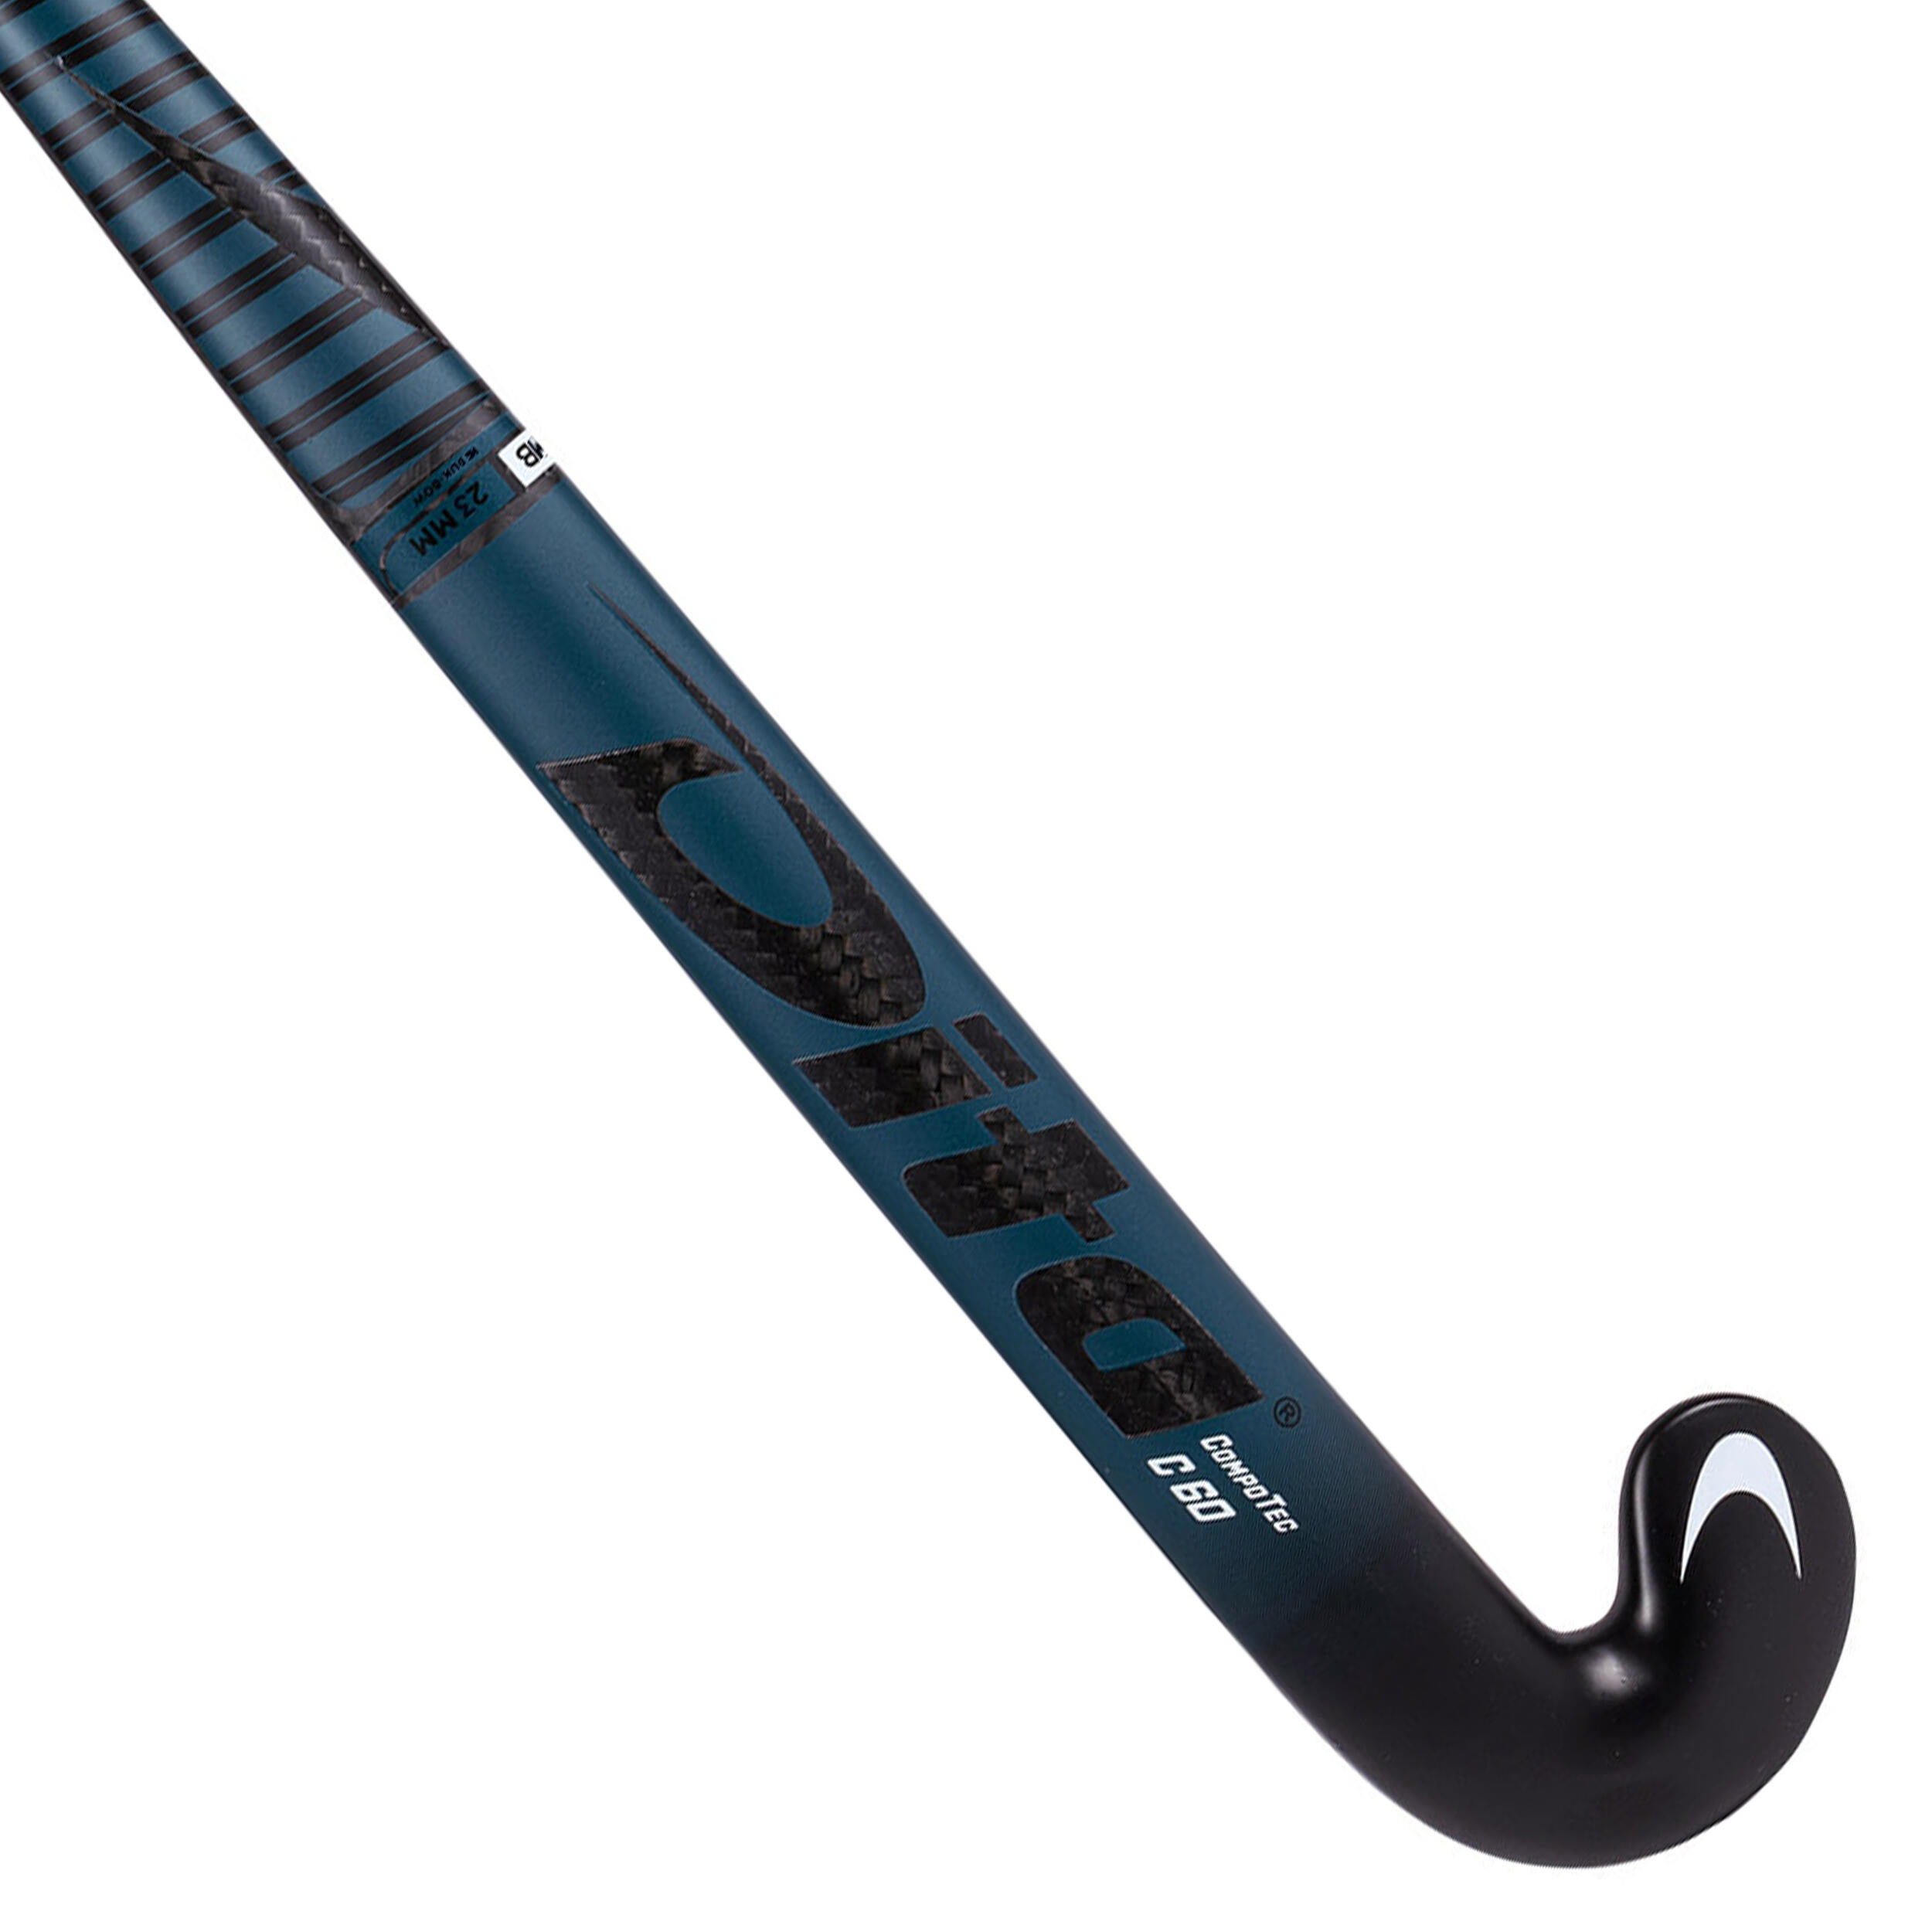 DITA Adult Intermediate 60% Carbon Mid Bow Field Hockey Stick CompotecC60 - Dark Turquoise